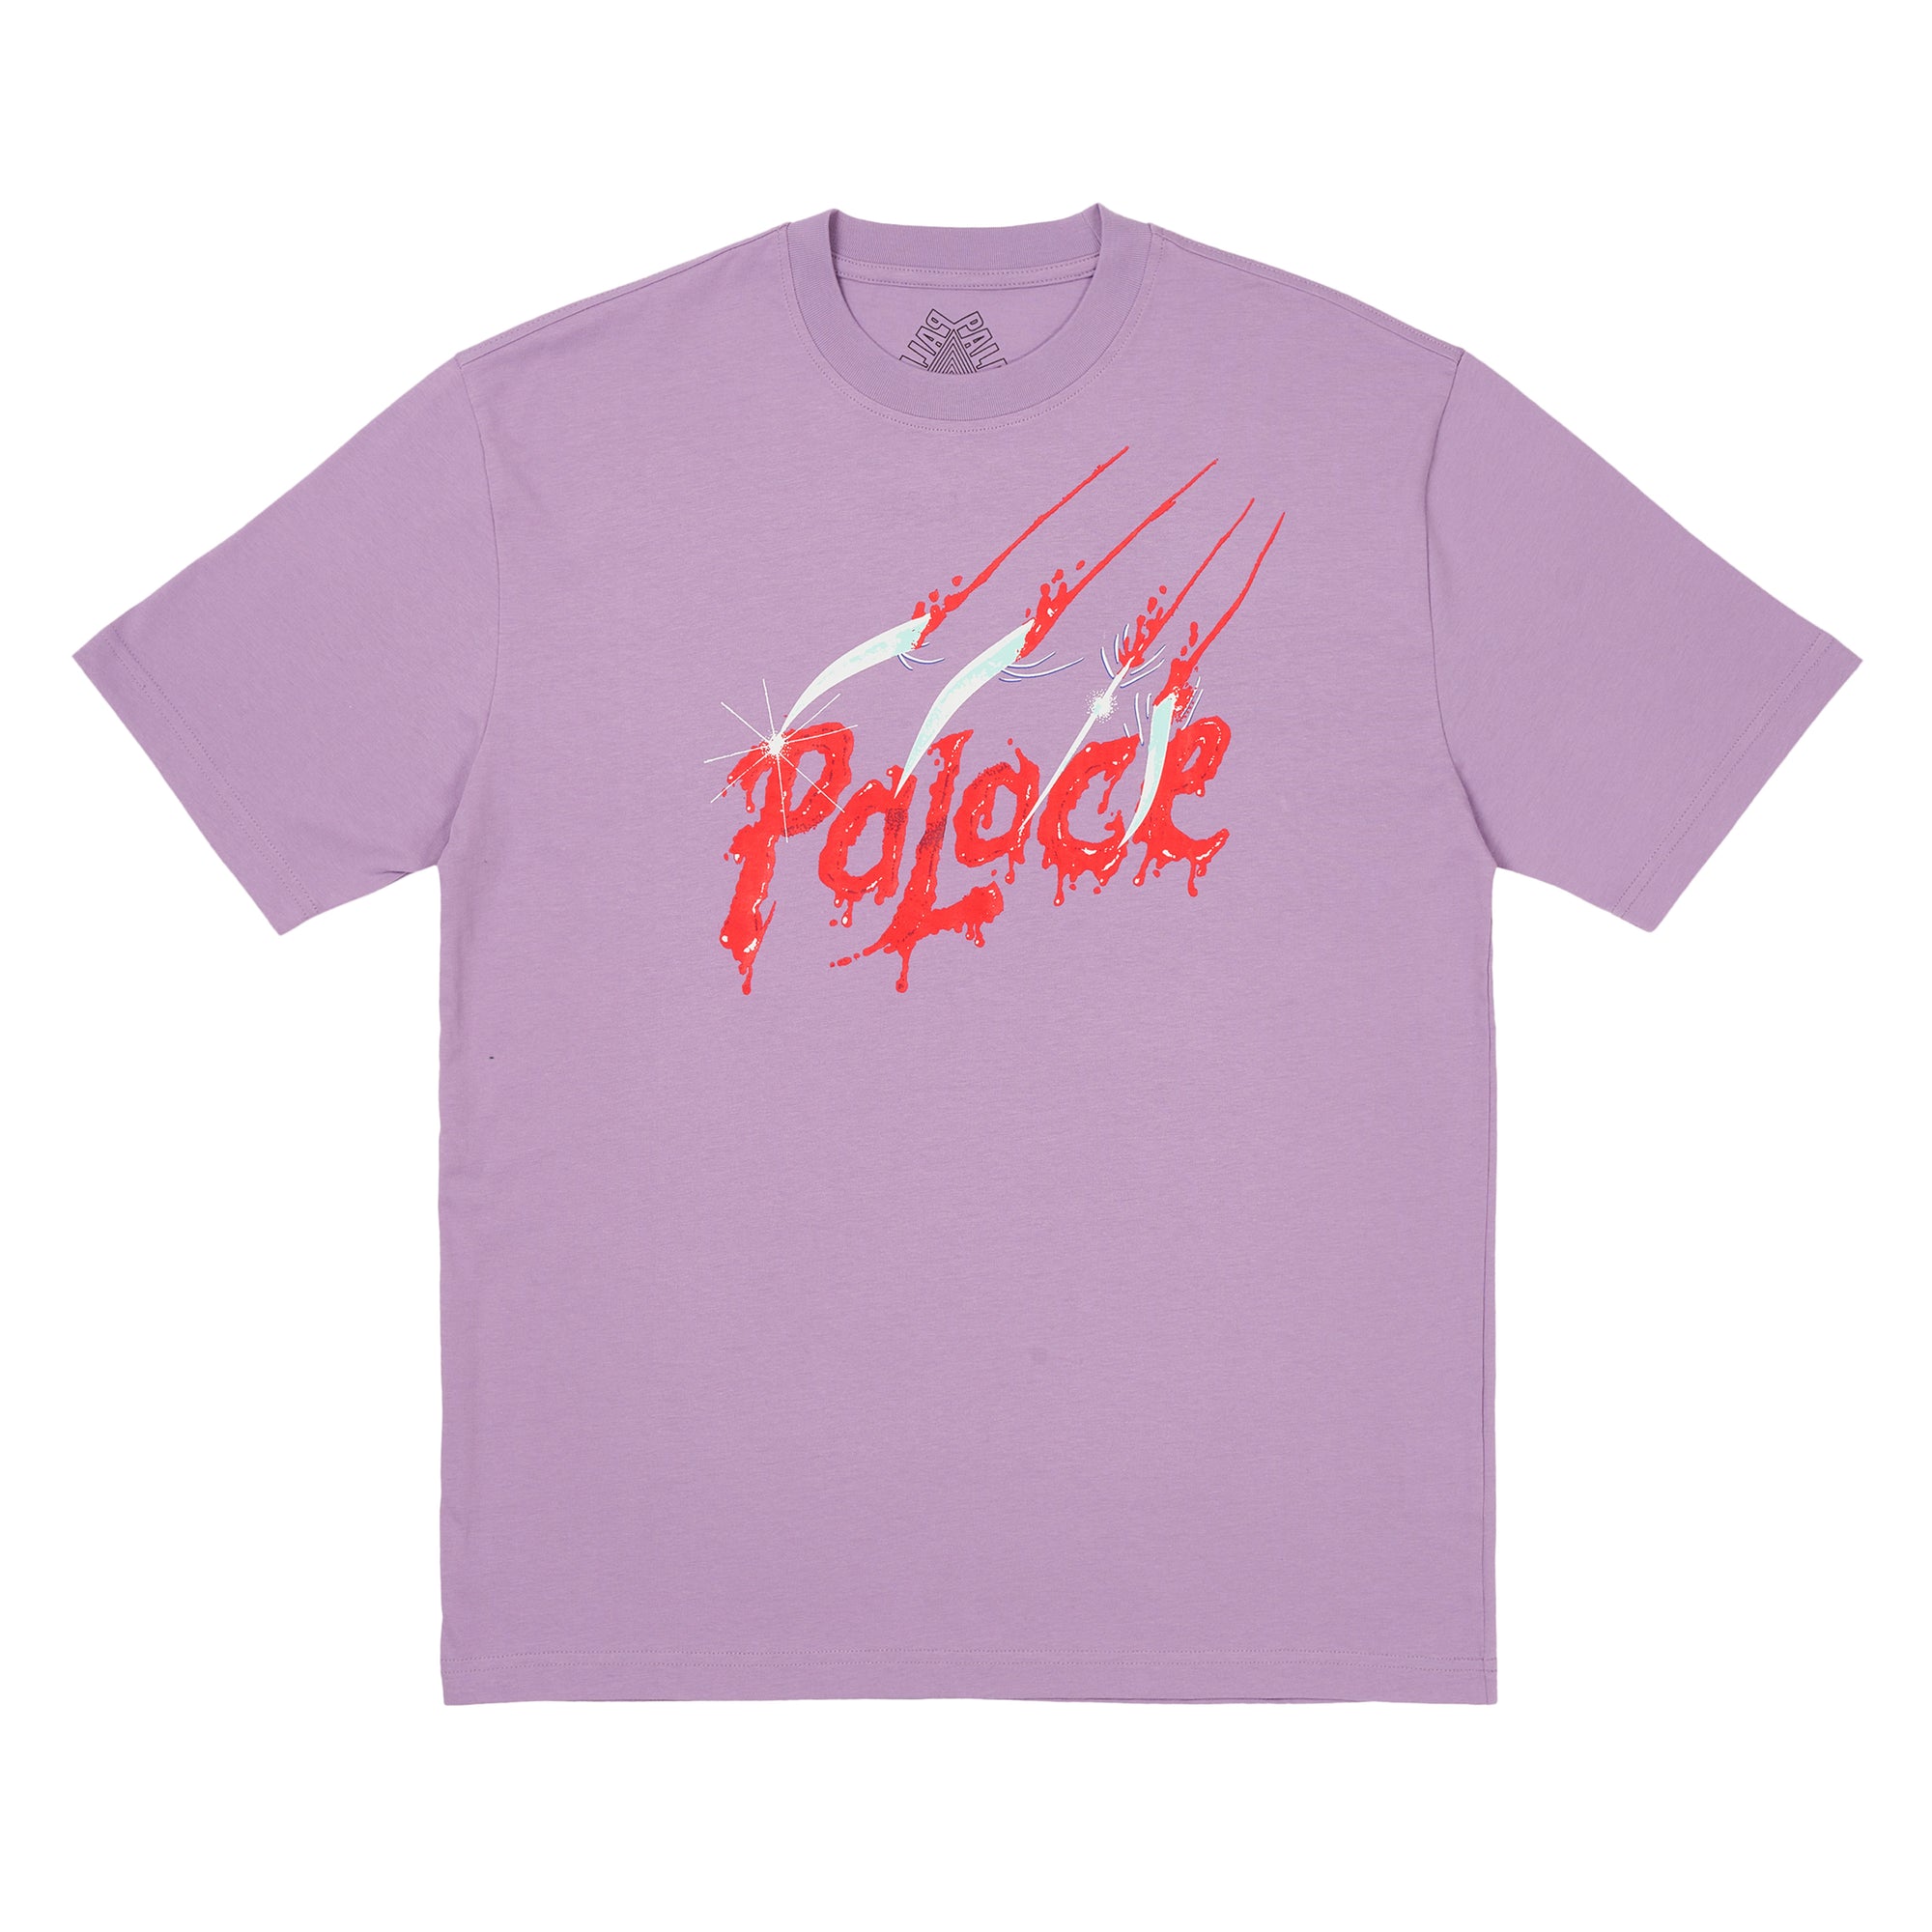 Palace - Scratchy T-Shirt - (Light Purple) view 1